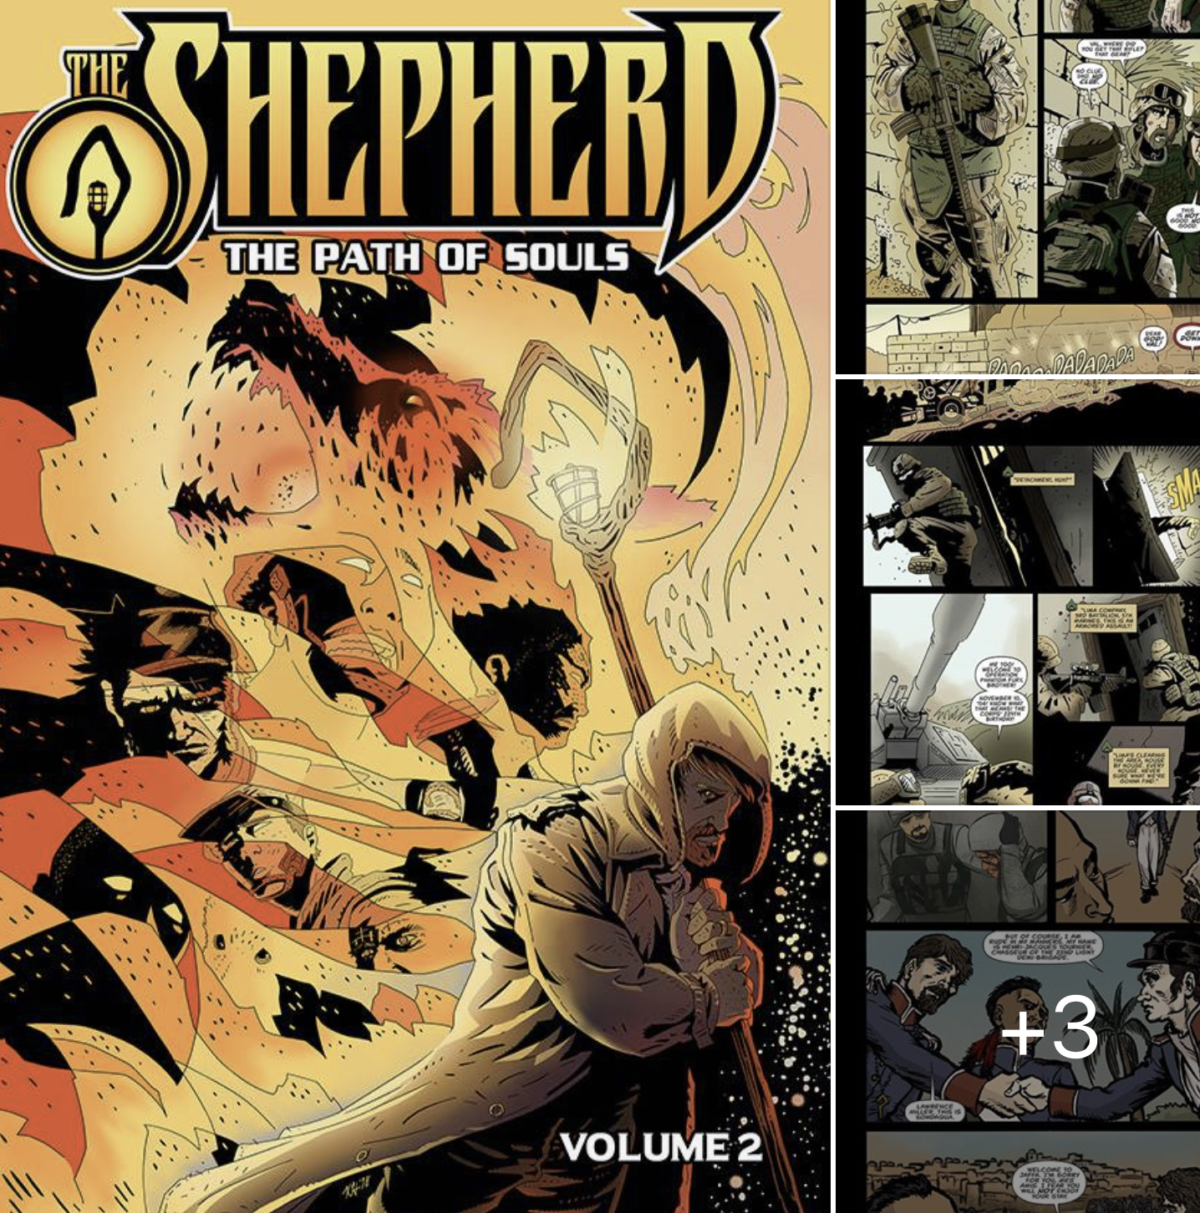 THE SHEPHERD: THE PATH OF SOULS now in Diamond Comic Distributors DIAMOND # NOV151223.